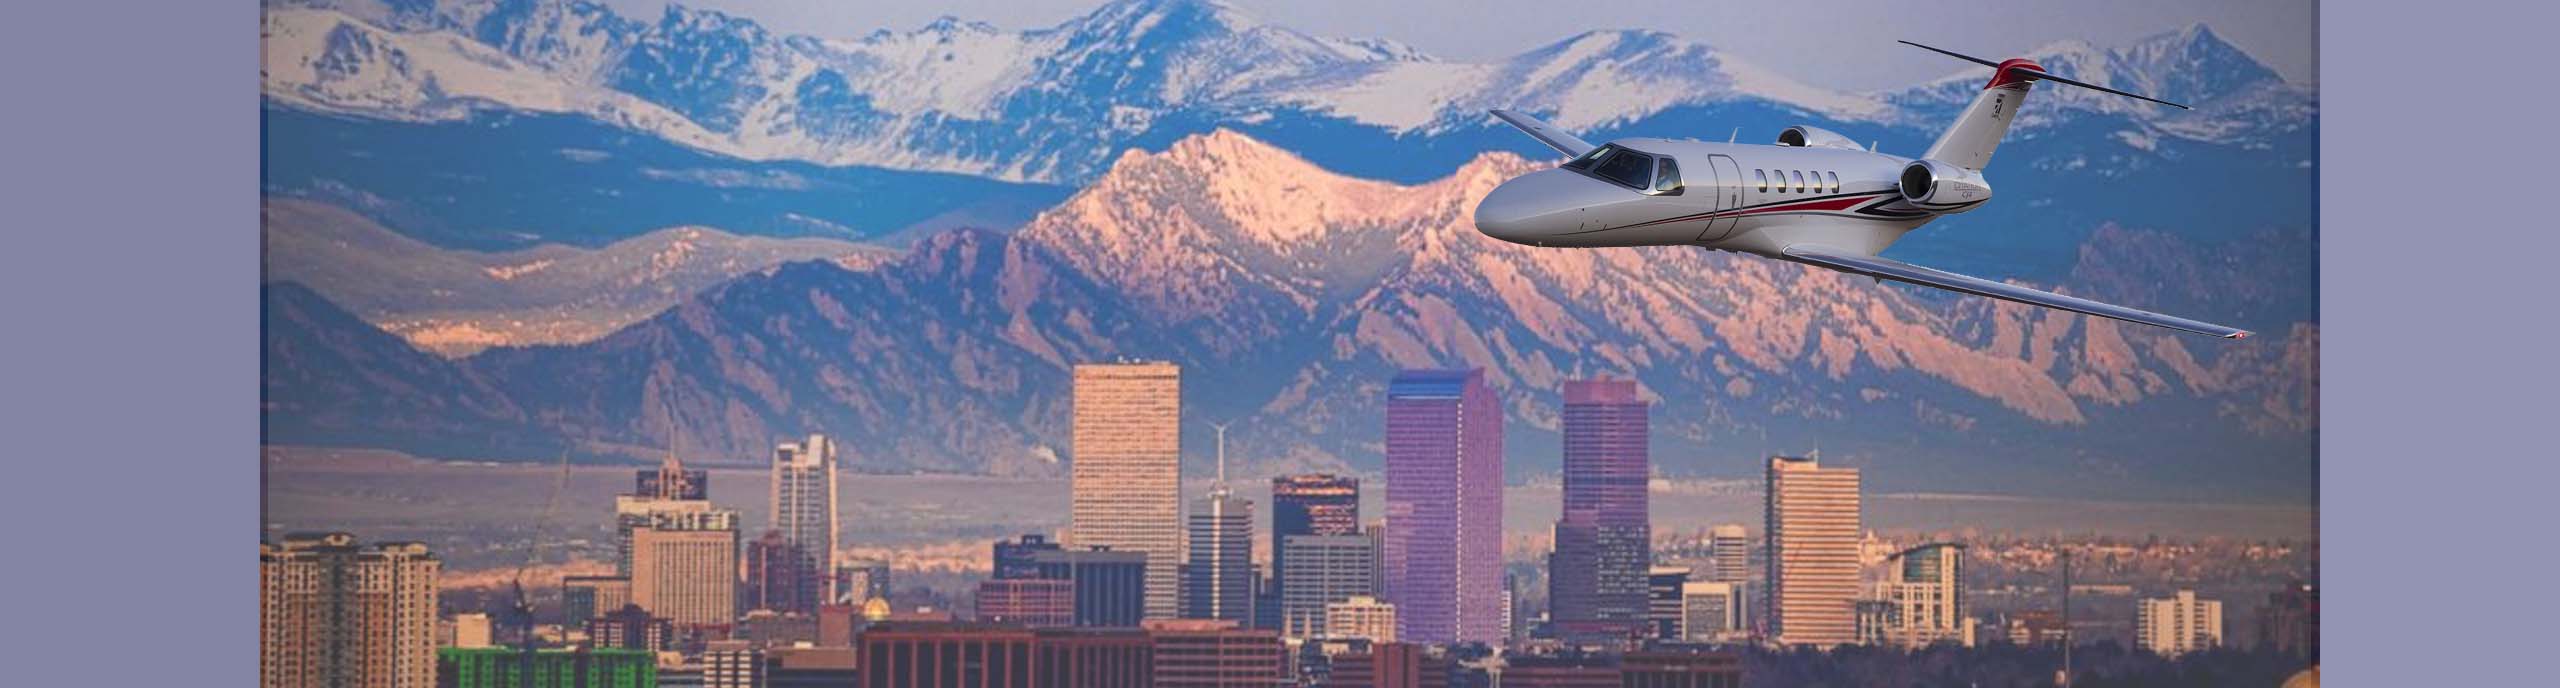 Denver Private Jet Charter